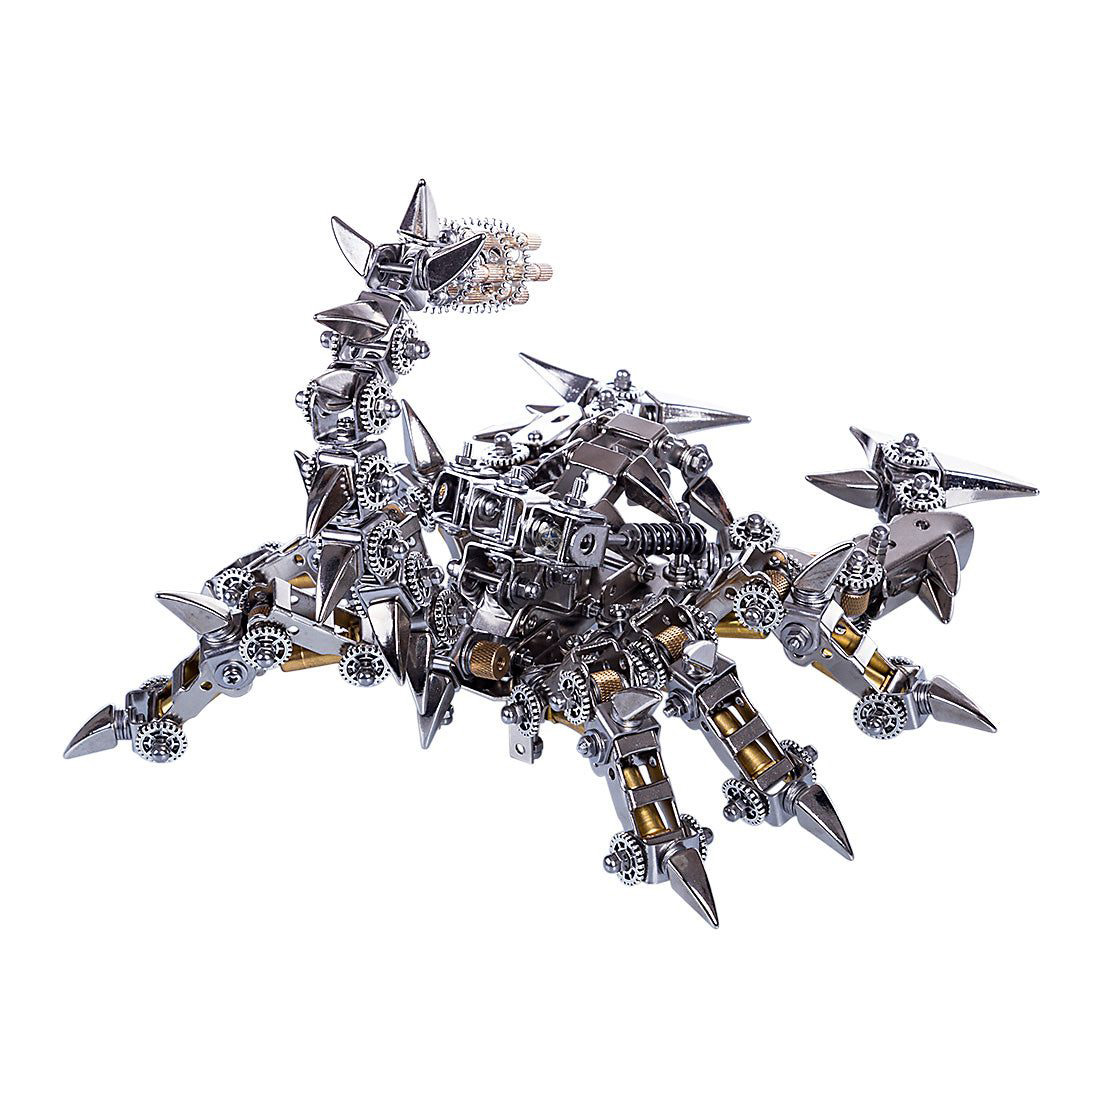 https://cdn.actionfigurenow.com/wp-content/uploads/2024/01/moyustore-diy-assembled-model-kit-3d-stainless-steel-mechanical-model-war-scorpion_3.jpg